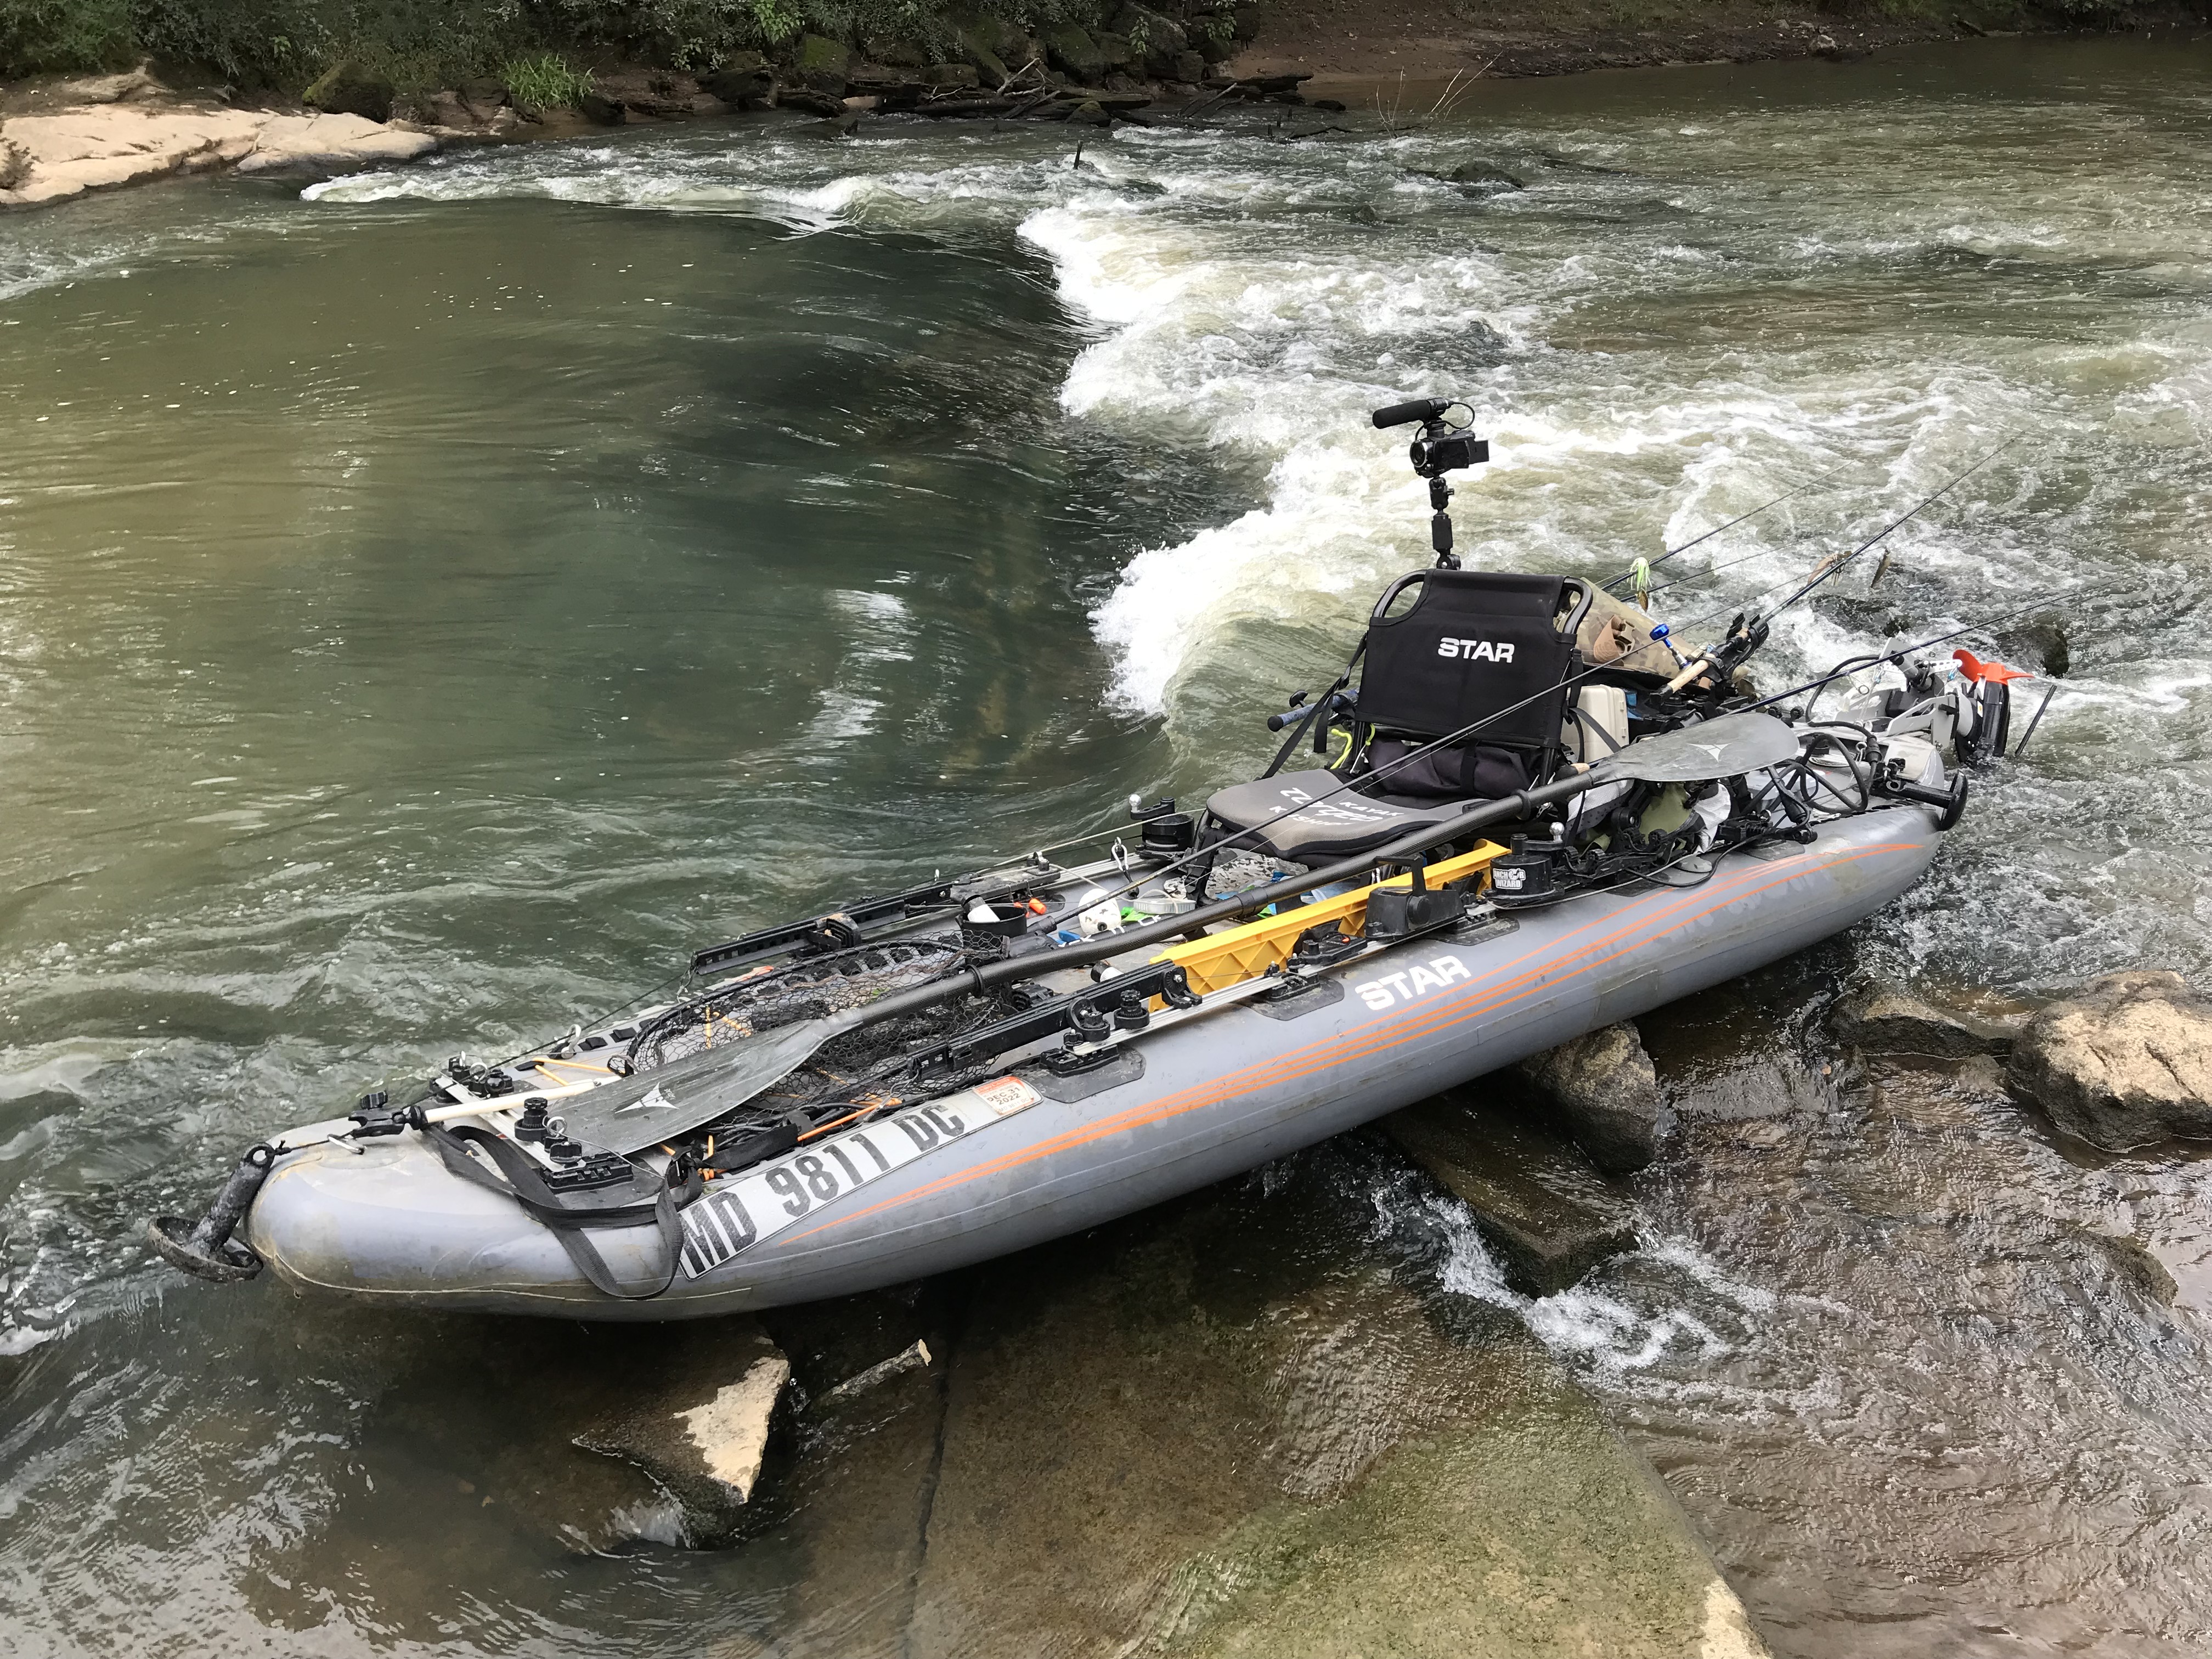 River Fishing with an Star Inflatable kayak and torqeedo motor